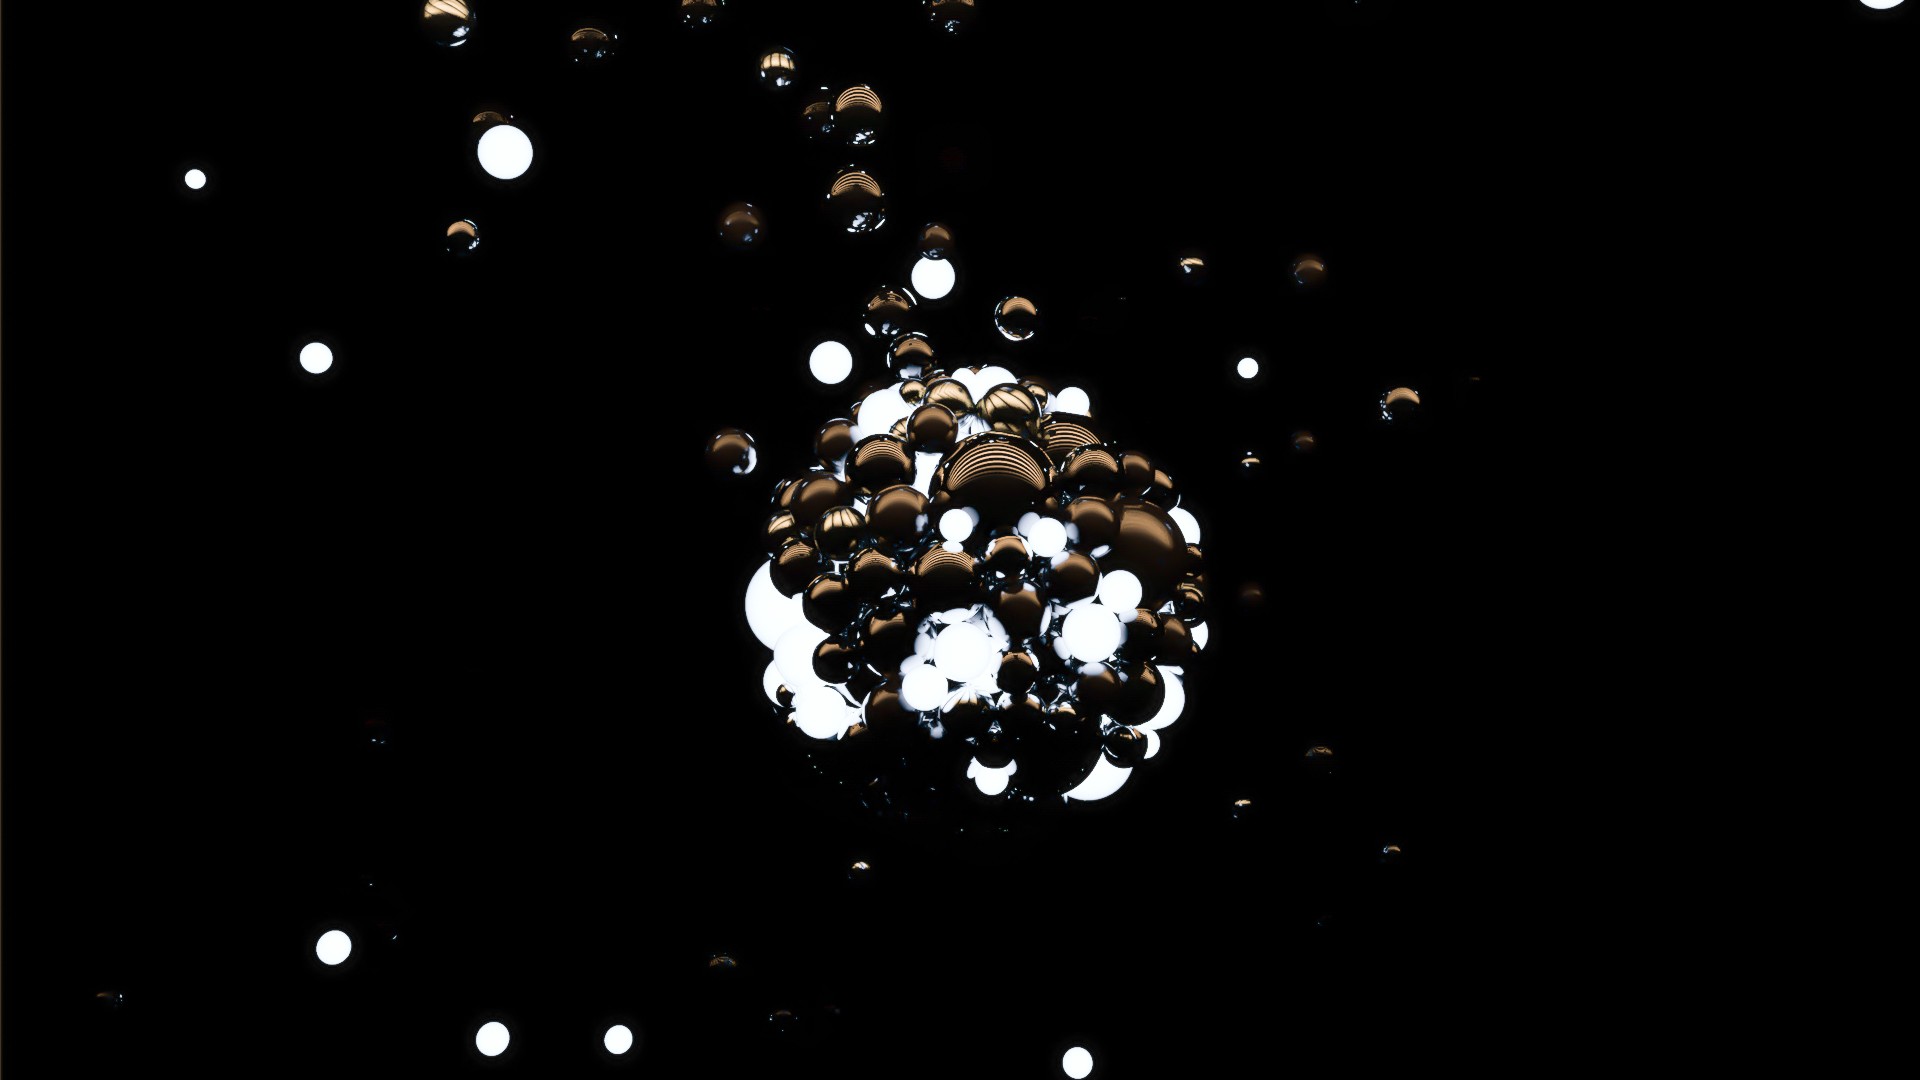 Abstract Selective Coloring Dark Digital Art Beige Bubbles Black Black Background Sphere 1920x1080